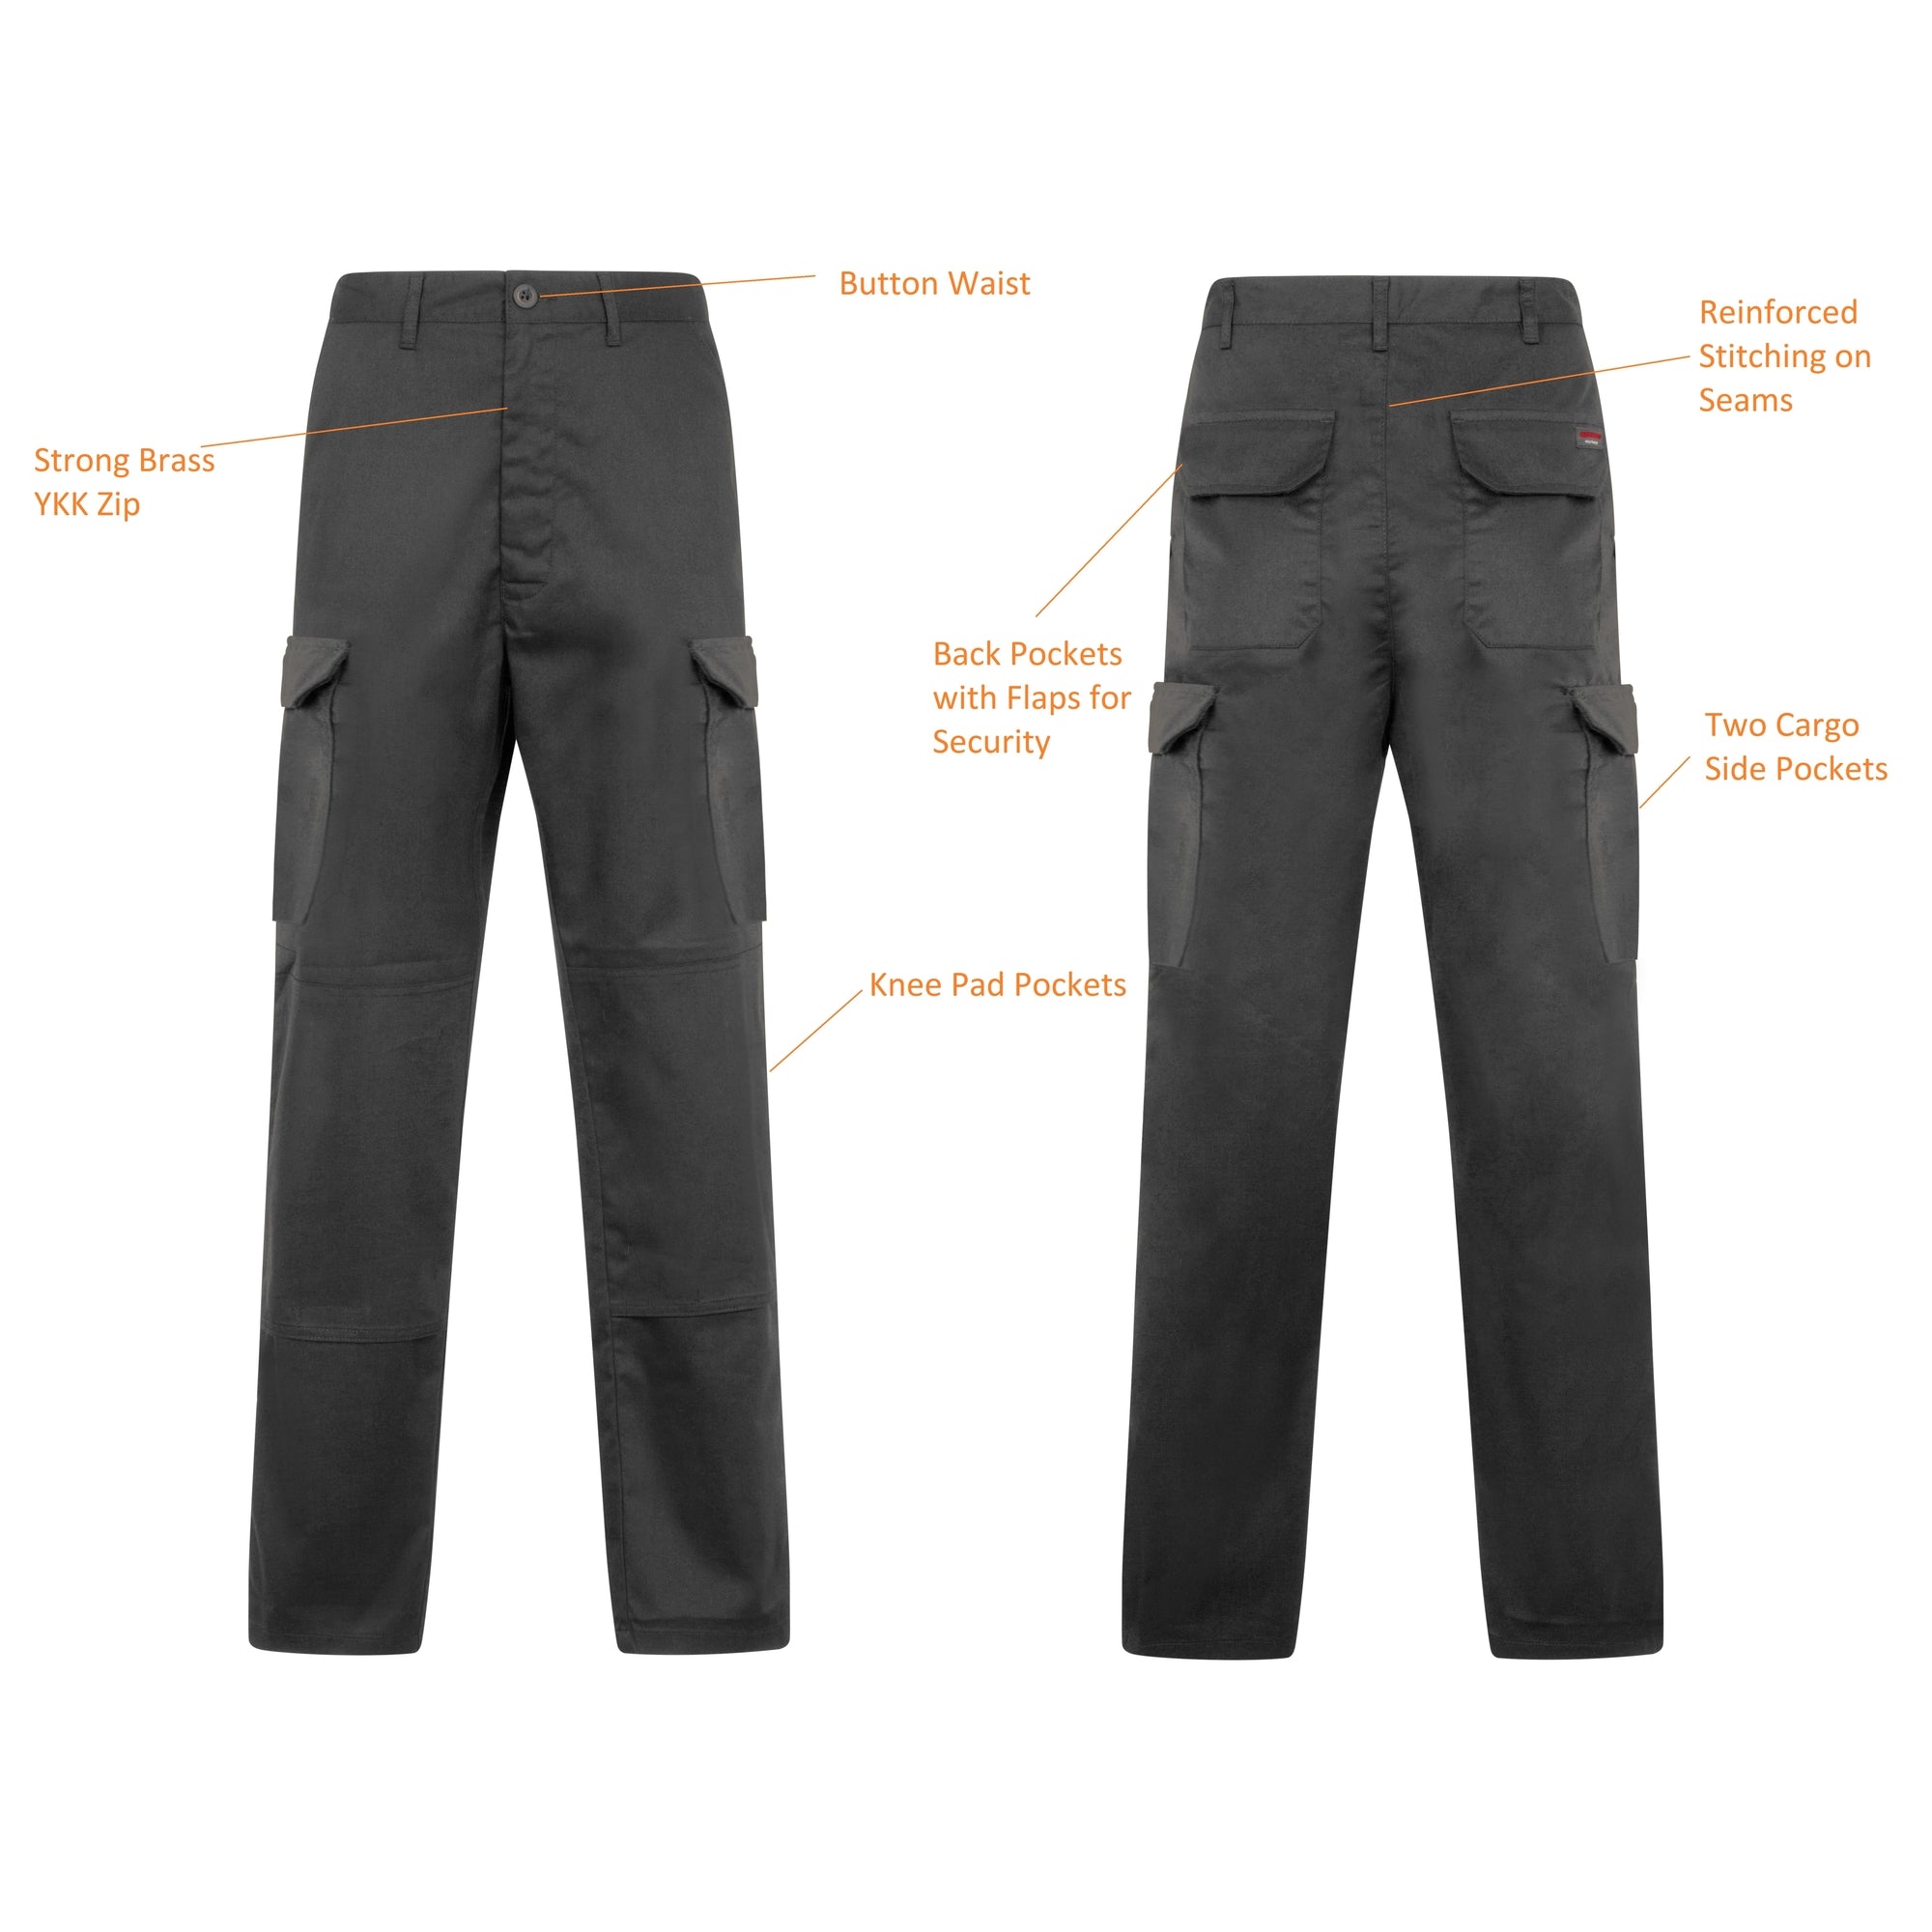 Buy chenshijiu Men's Pants Shirt Military Combat Trousers Set Army Green M  at Amazon.in